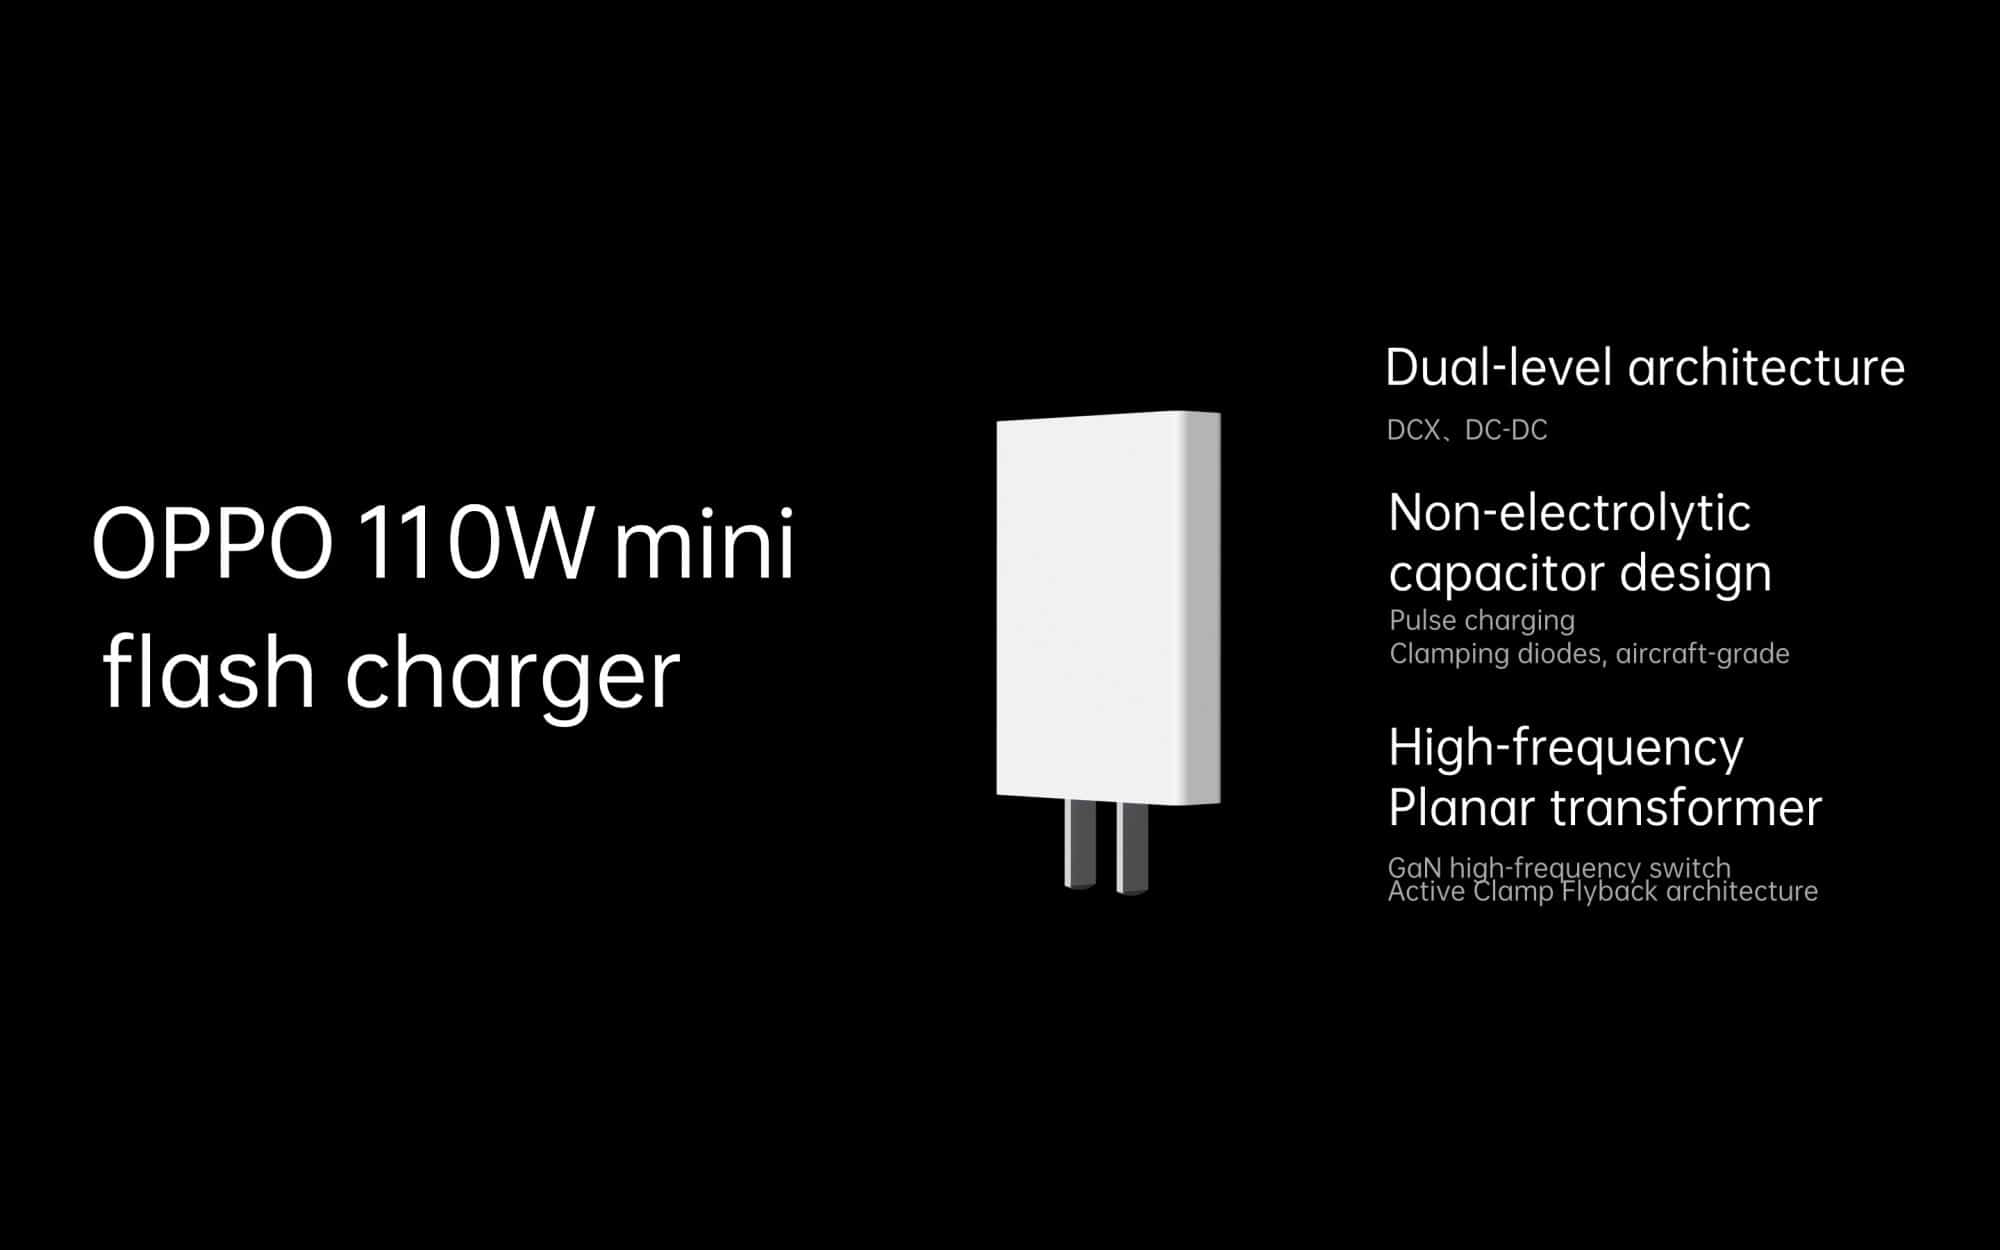 OPPO เปิดตัวเทคโนโลยี 125W Flash charge พร้อมชาร์จไร้สาย 65W AirVOOC wireless flash charge และ 50W mini SuperVOOC charger 9